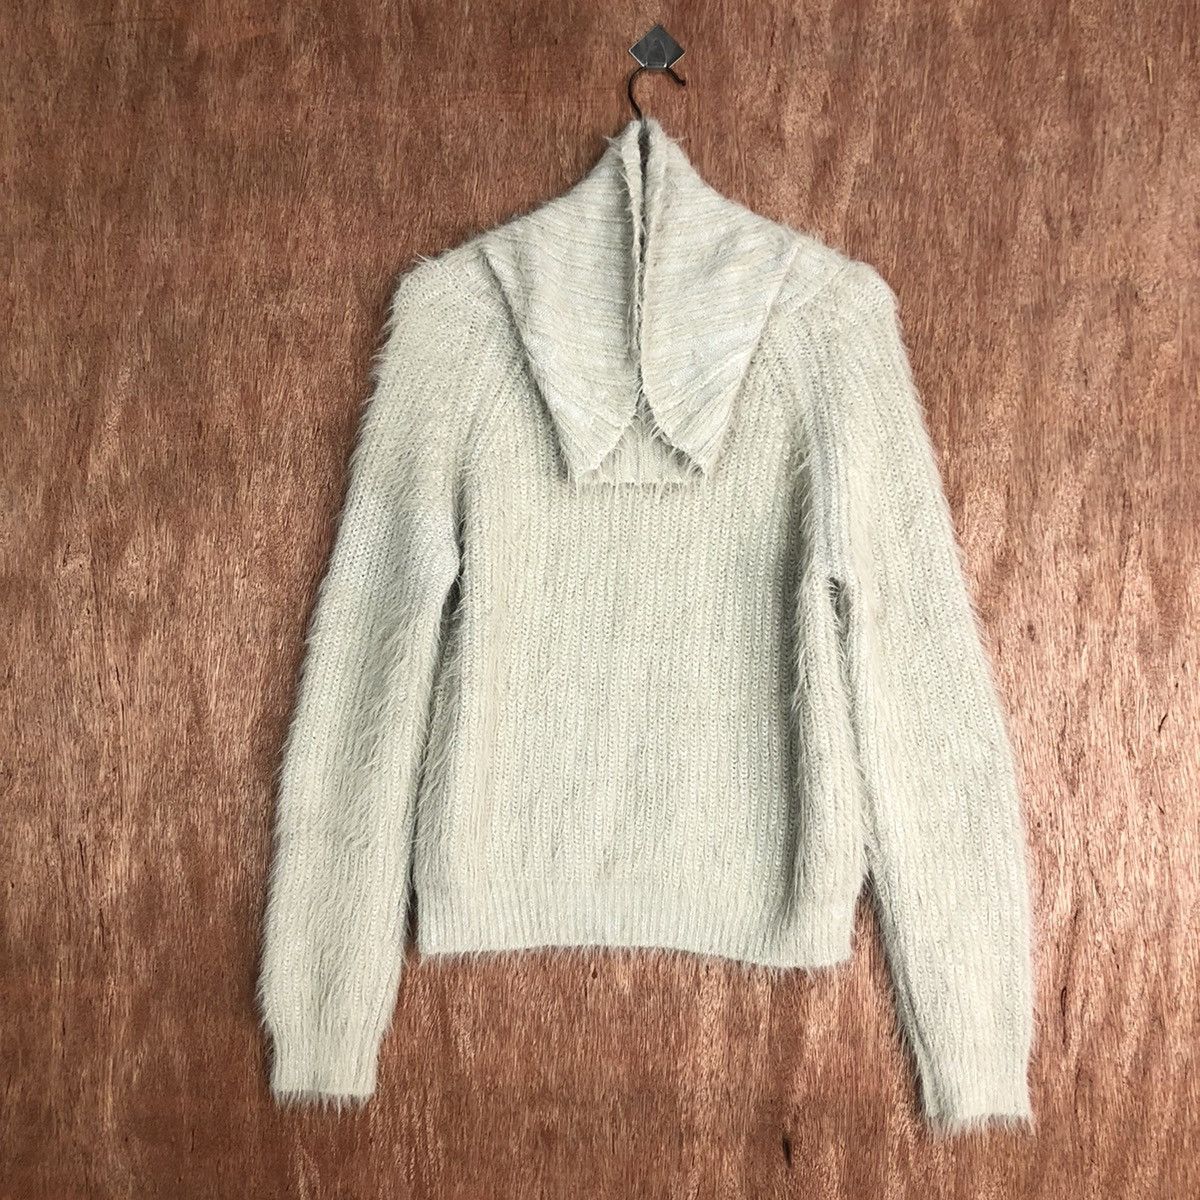 Homespun Knitwear Turtle Neck Mohair Knit Sweater Size US S / EU 44-46 / 1 - 1 Preview